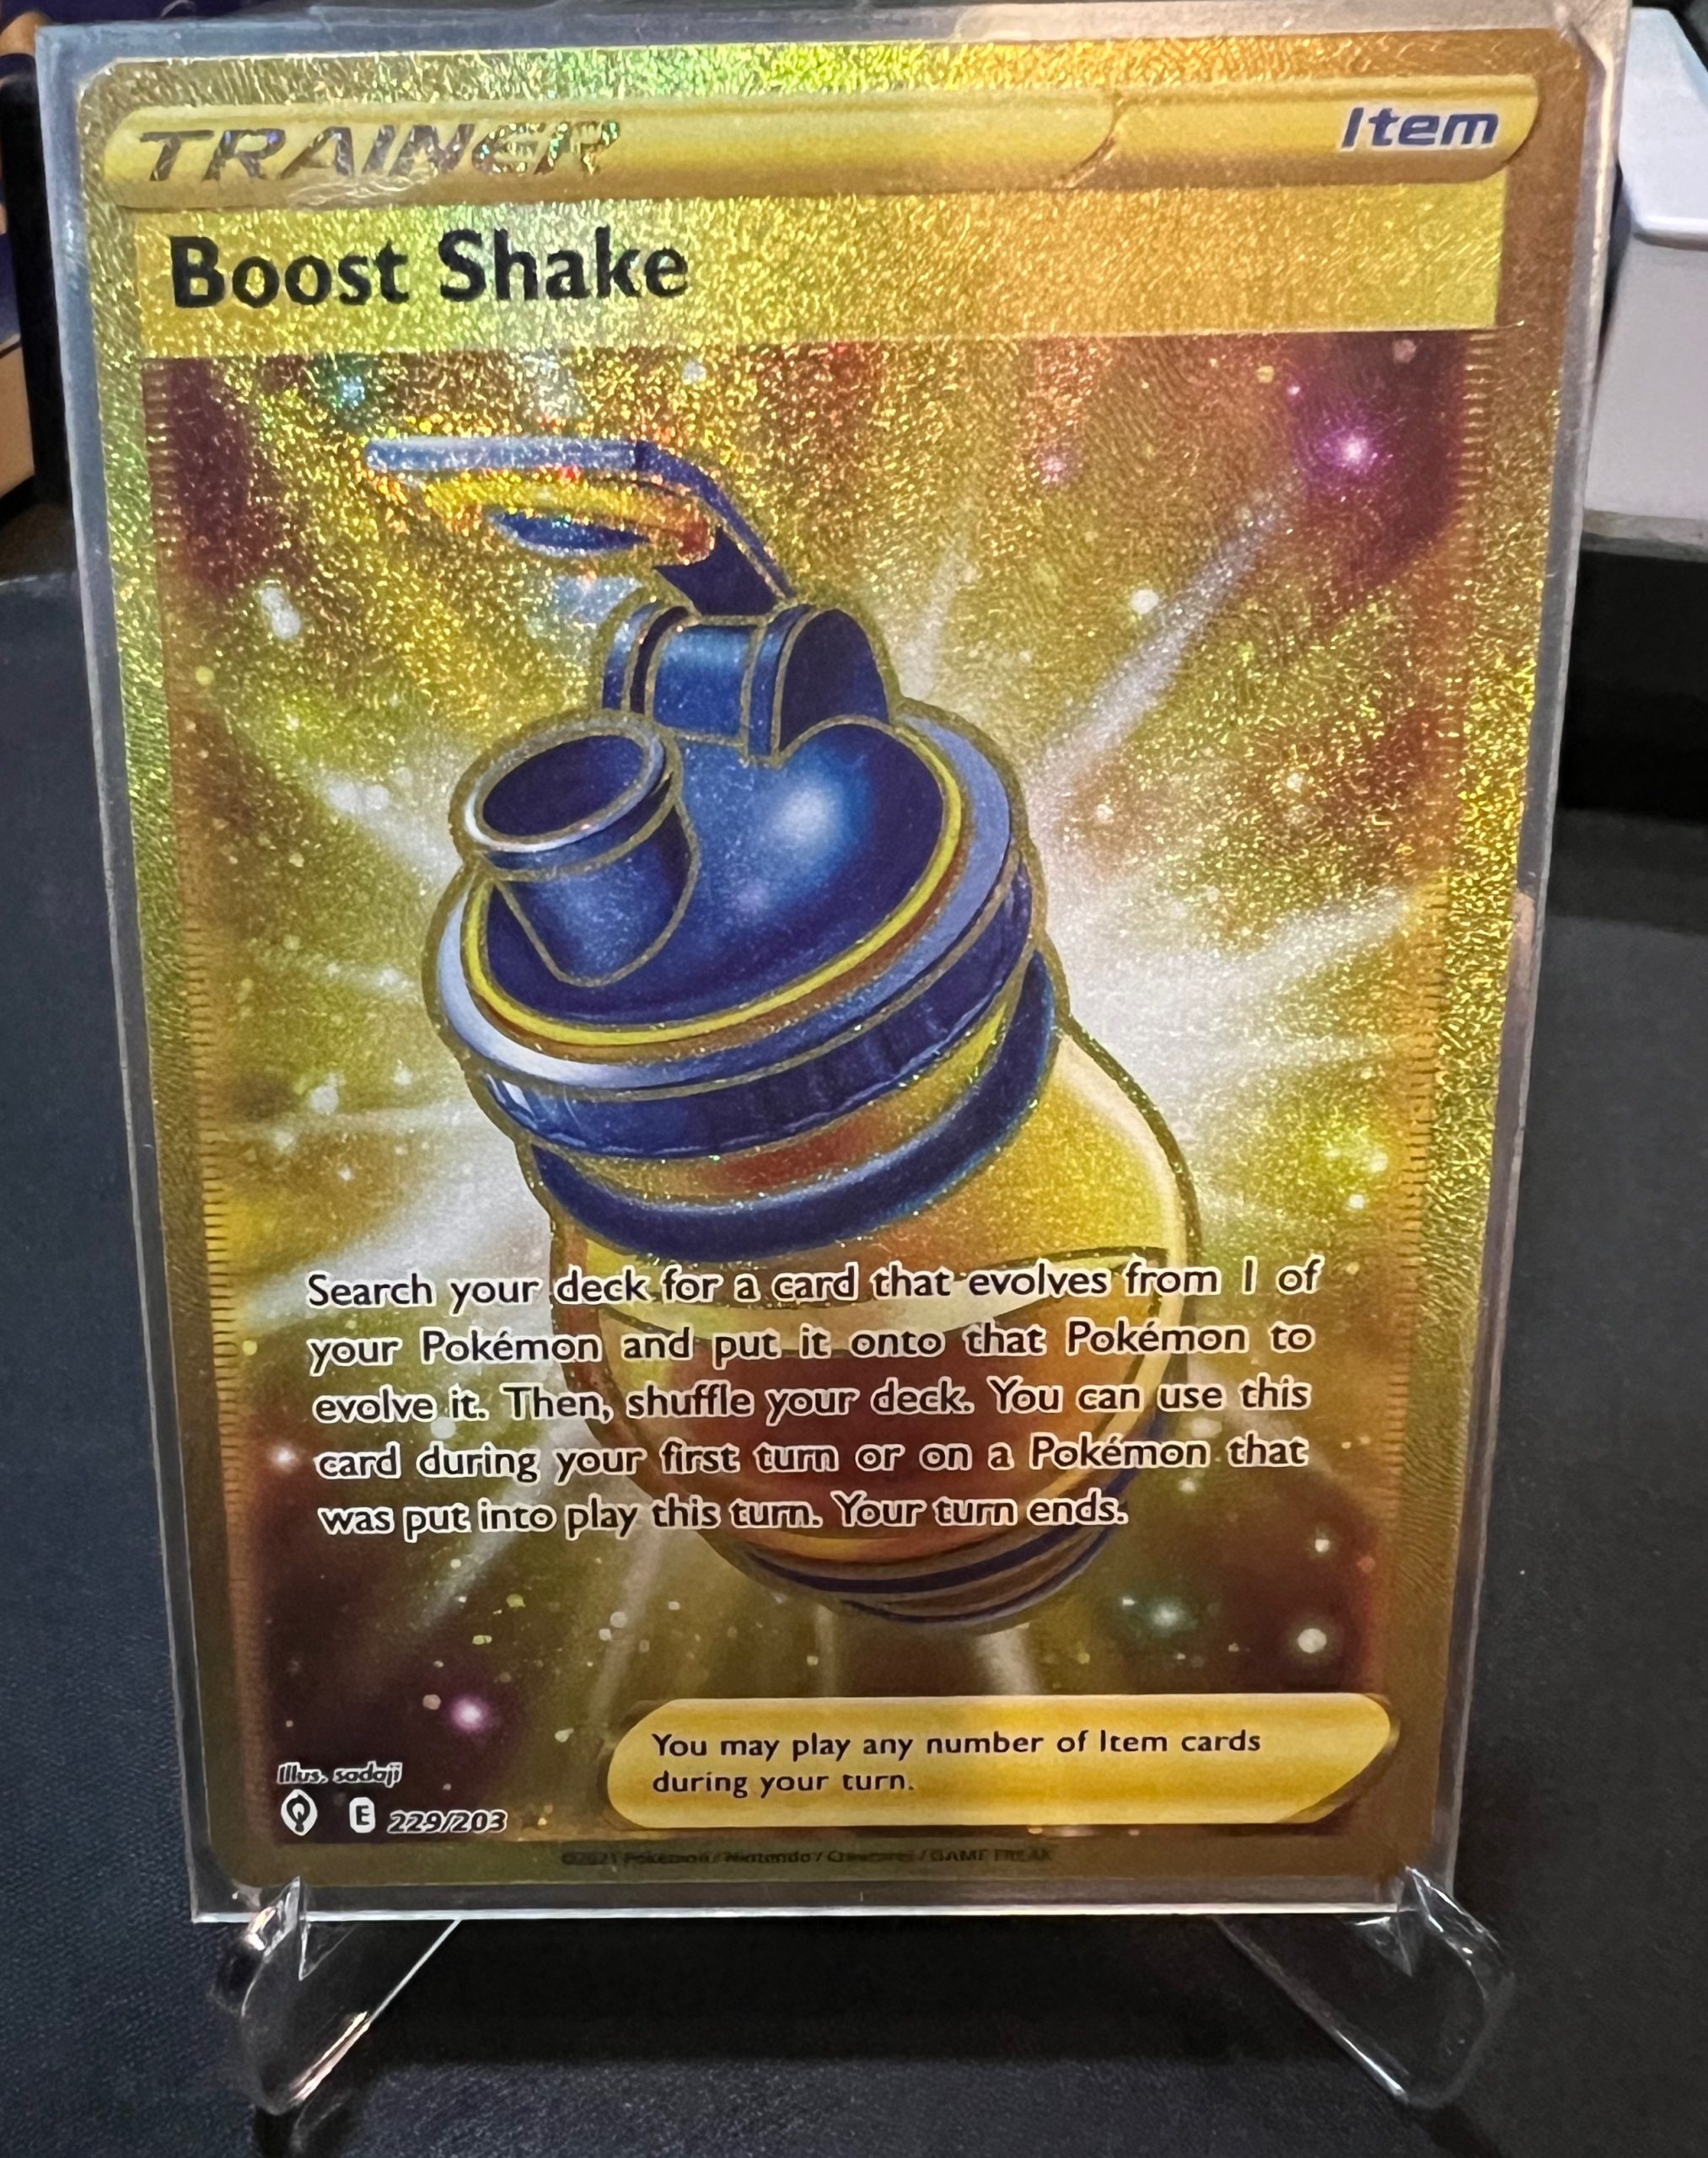 Boost Shake